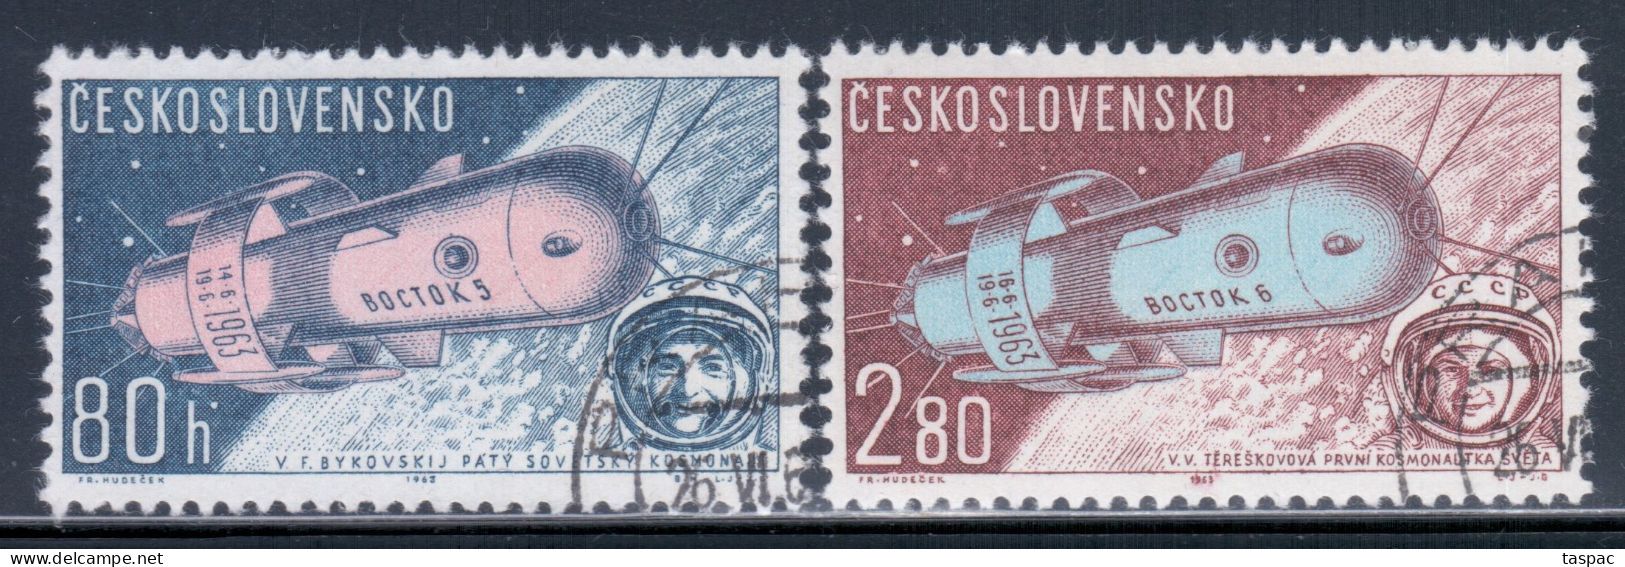 Czechoslovakia 1963 Mi# 1413-1414 Used - Vostok 5 And Vostok 6 / Space - Europa